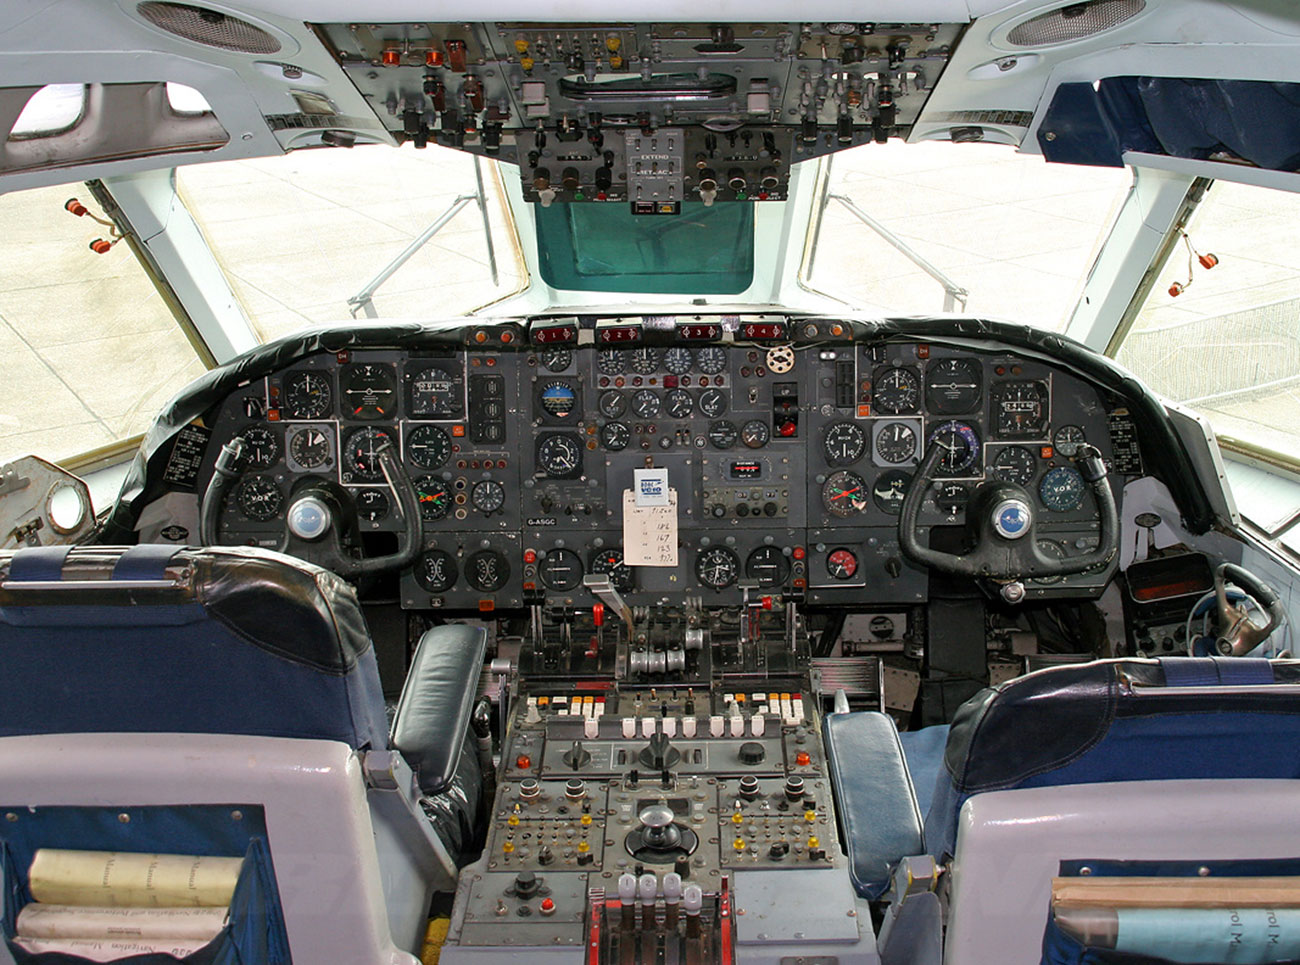 Vickers VC10 Cockpit